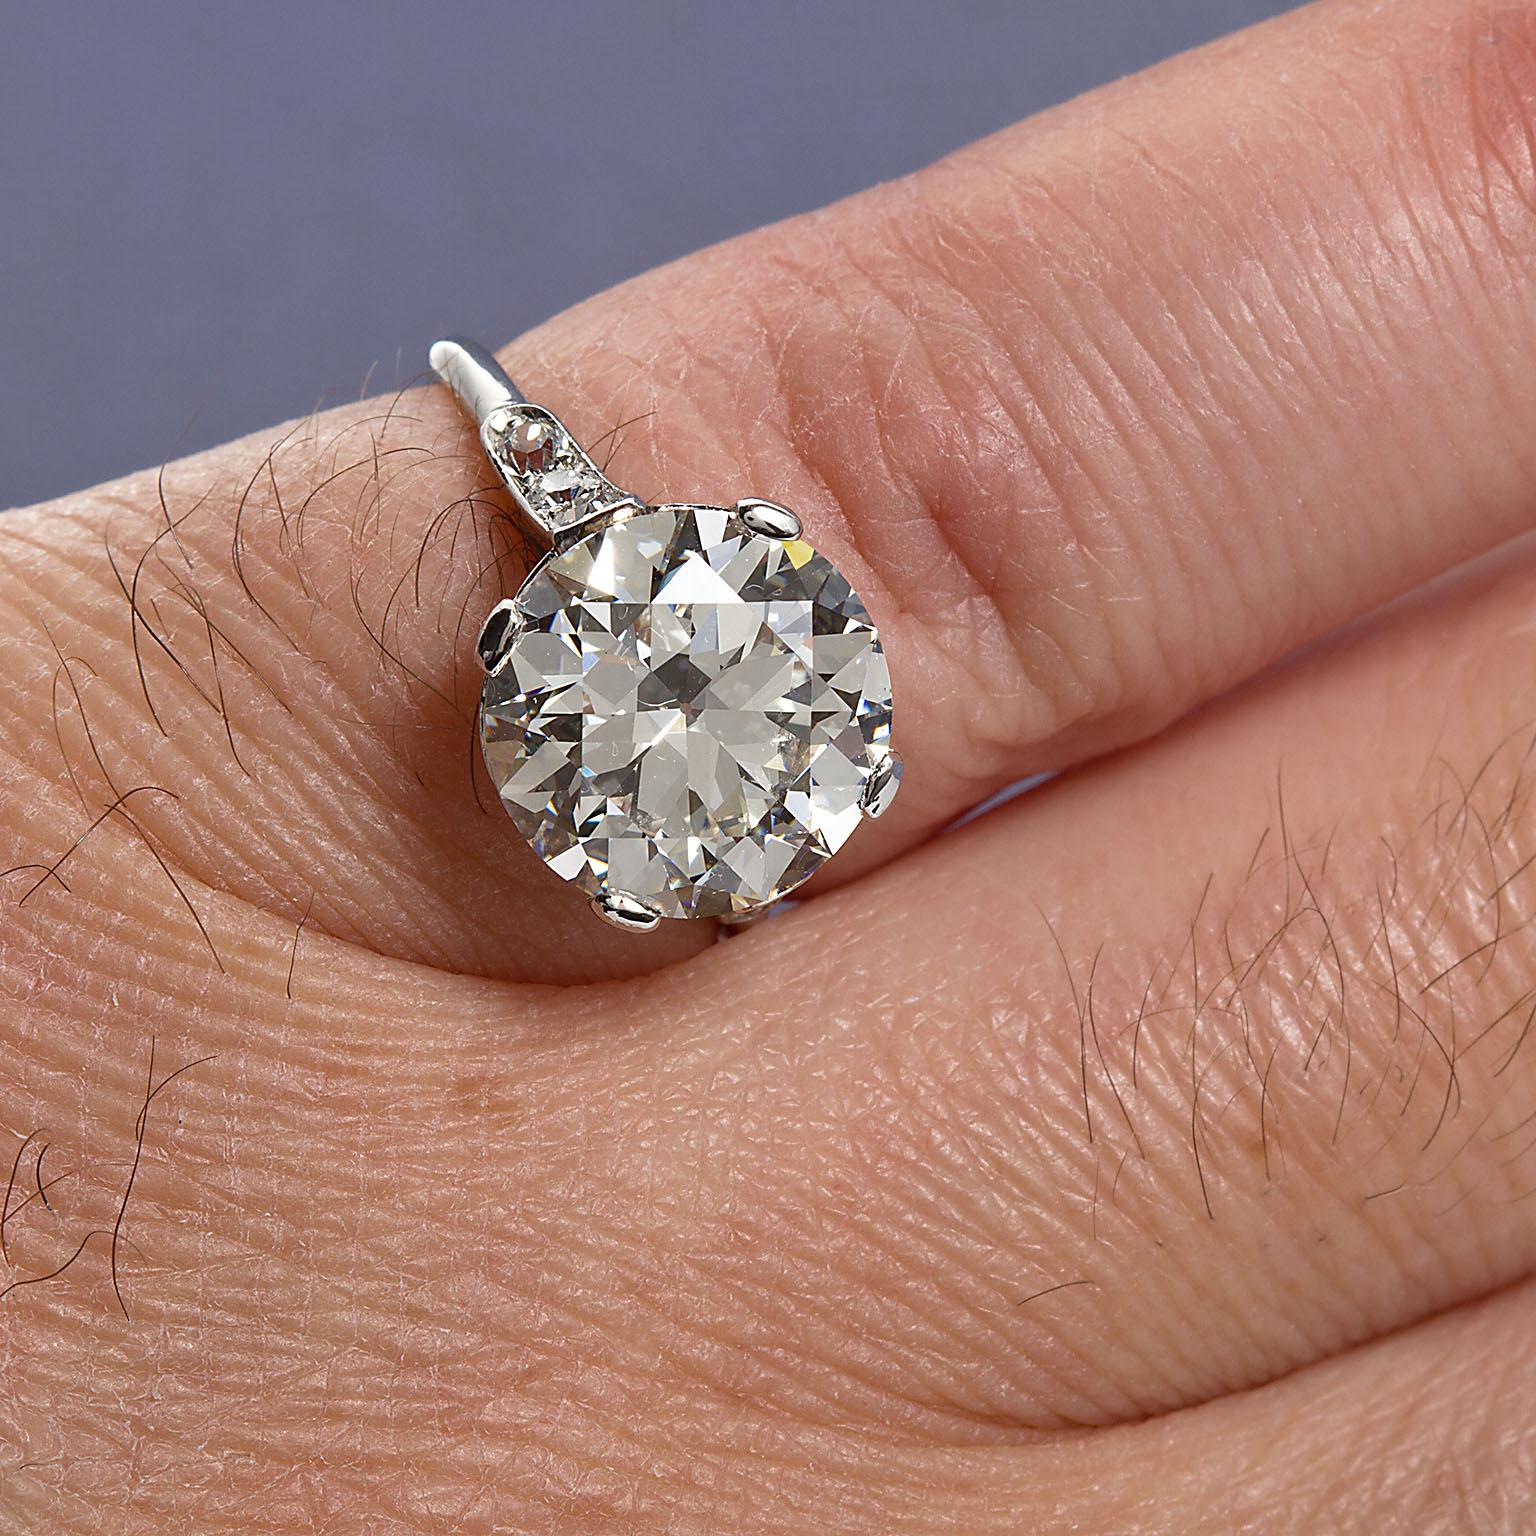 Cartier Paris Round Brilliant Diamond Engagement Ring 4.41 Carat White Gold GIA 10